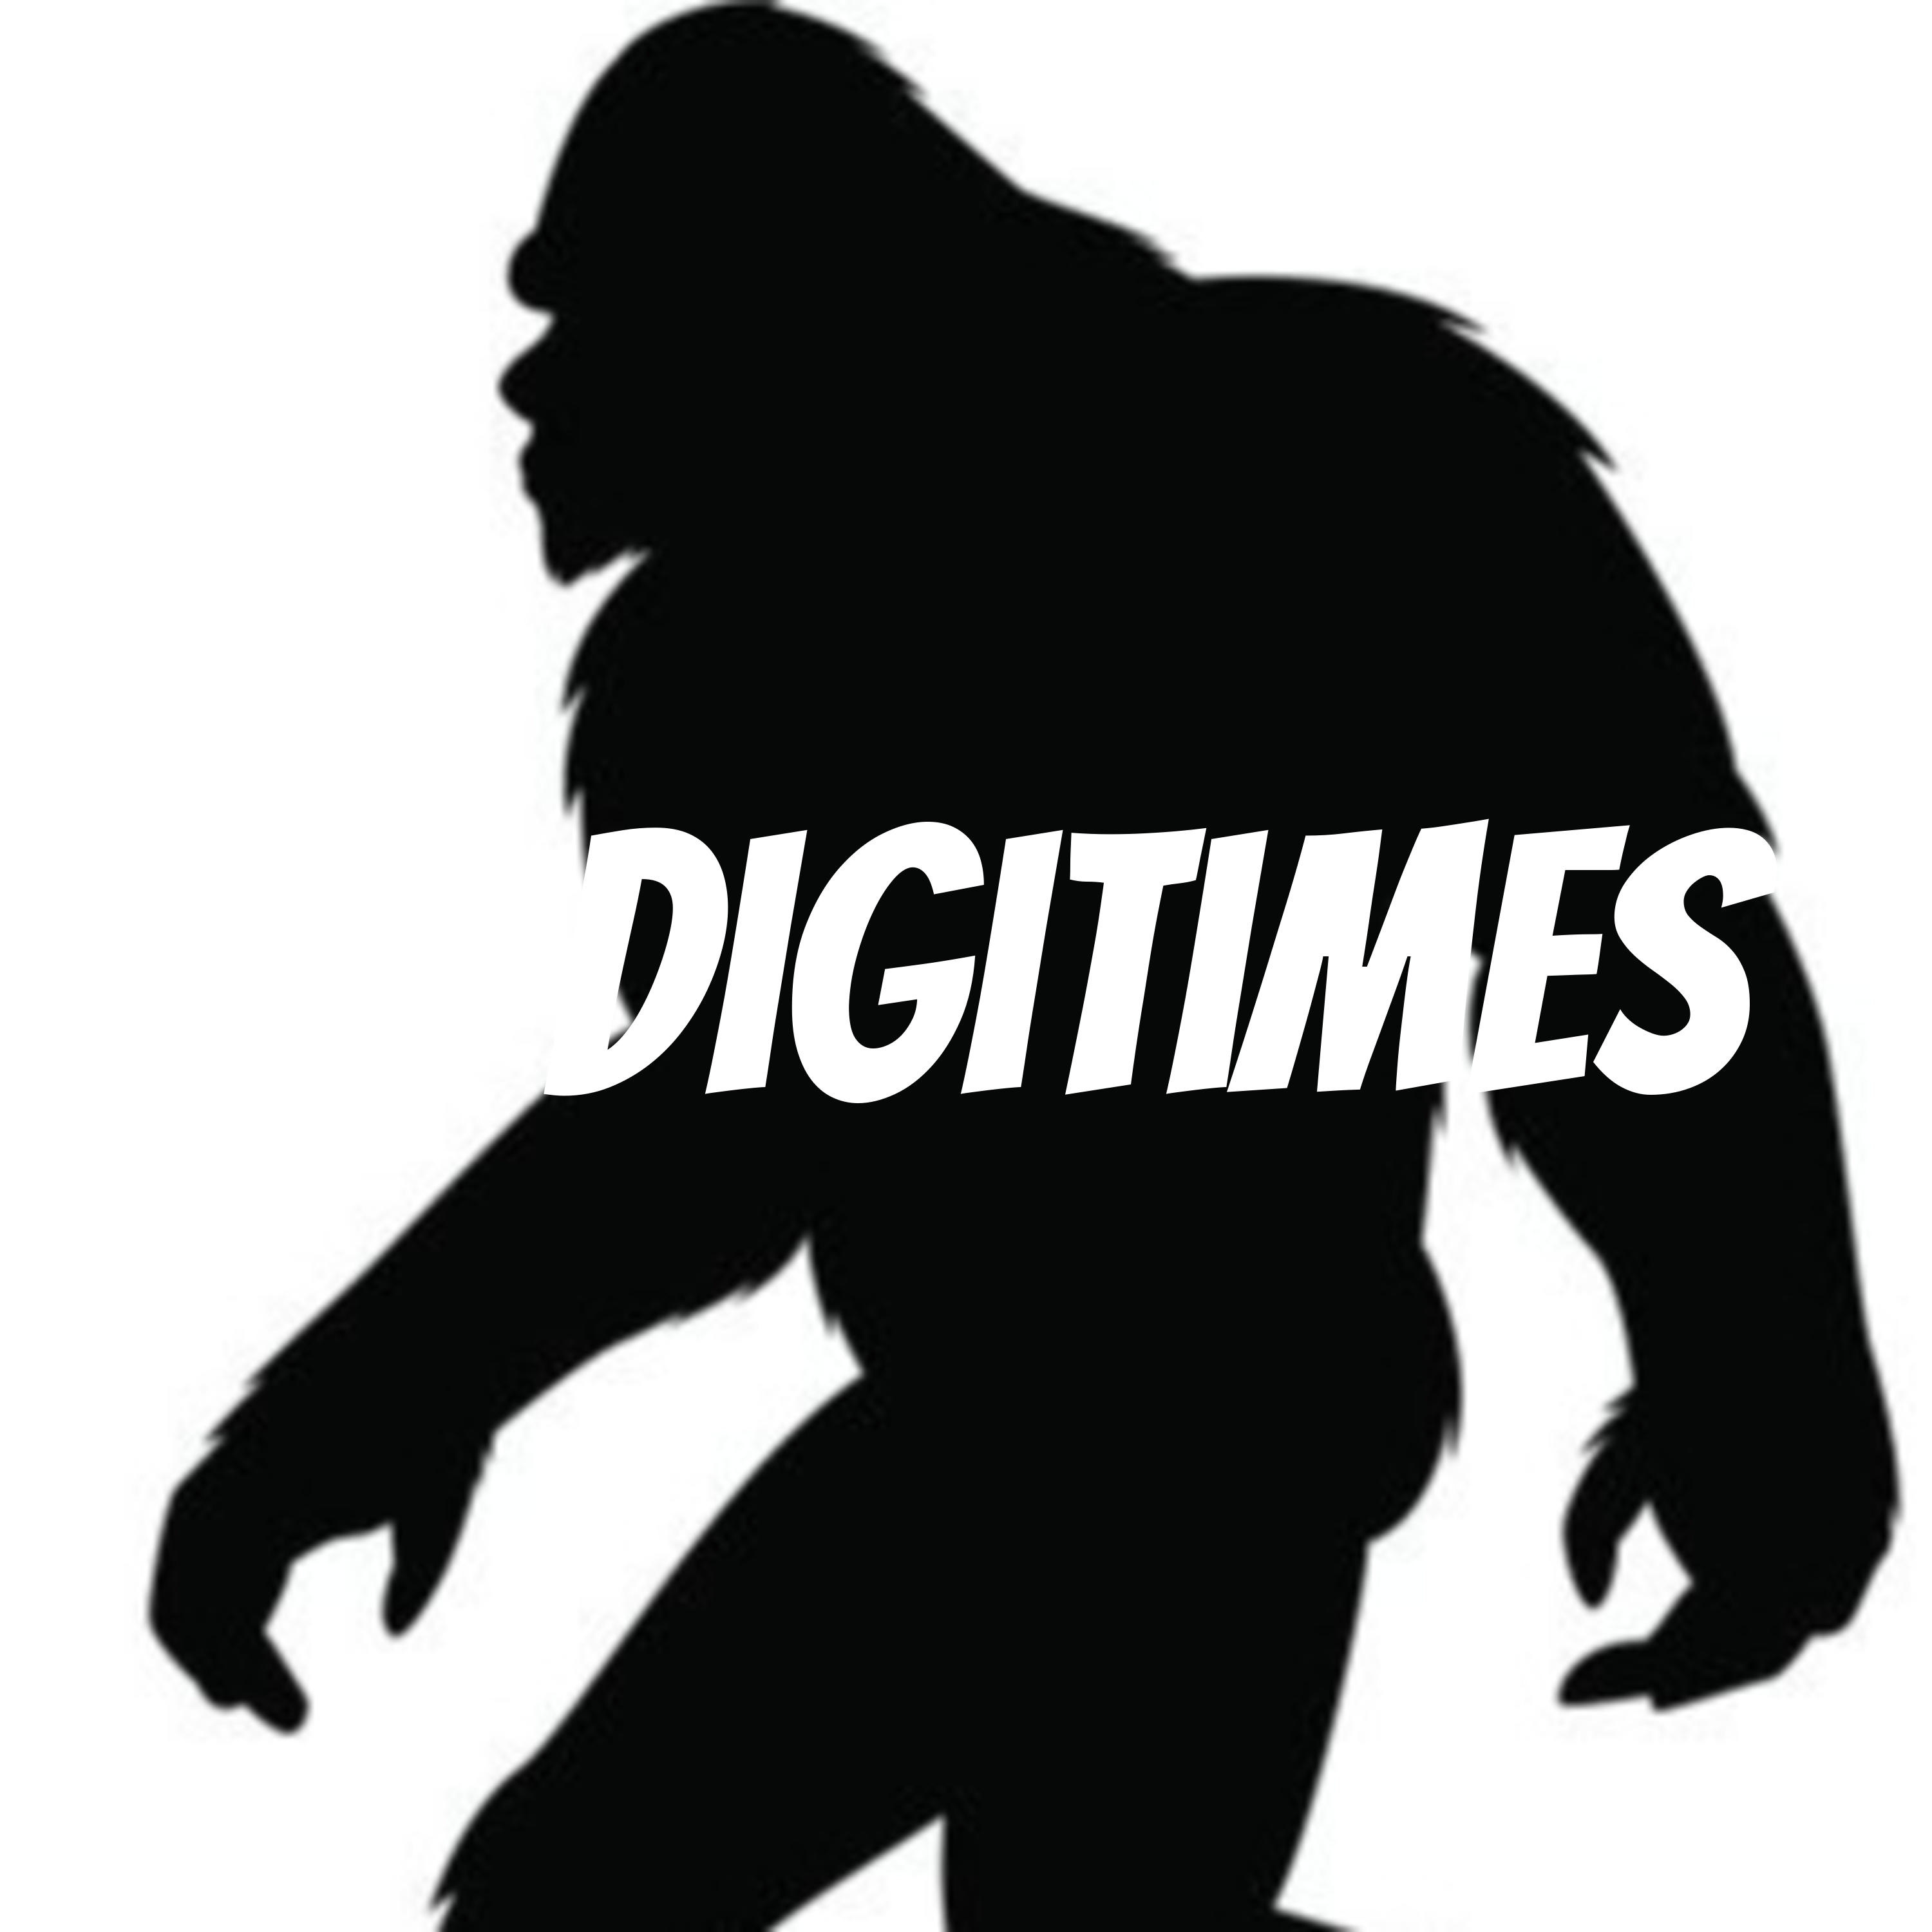 digitimes_logo96m9s.jpg